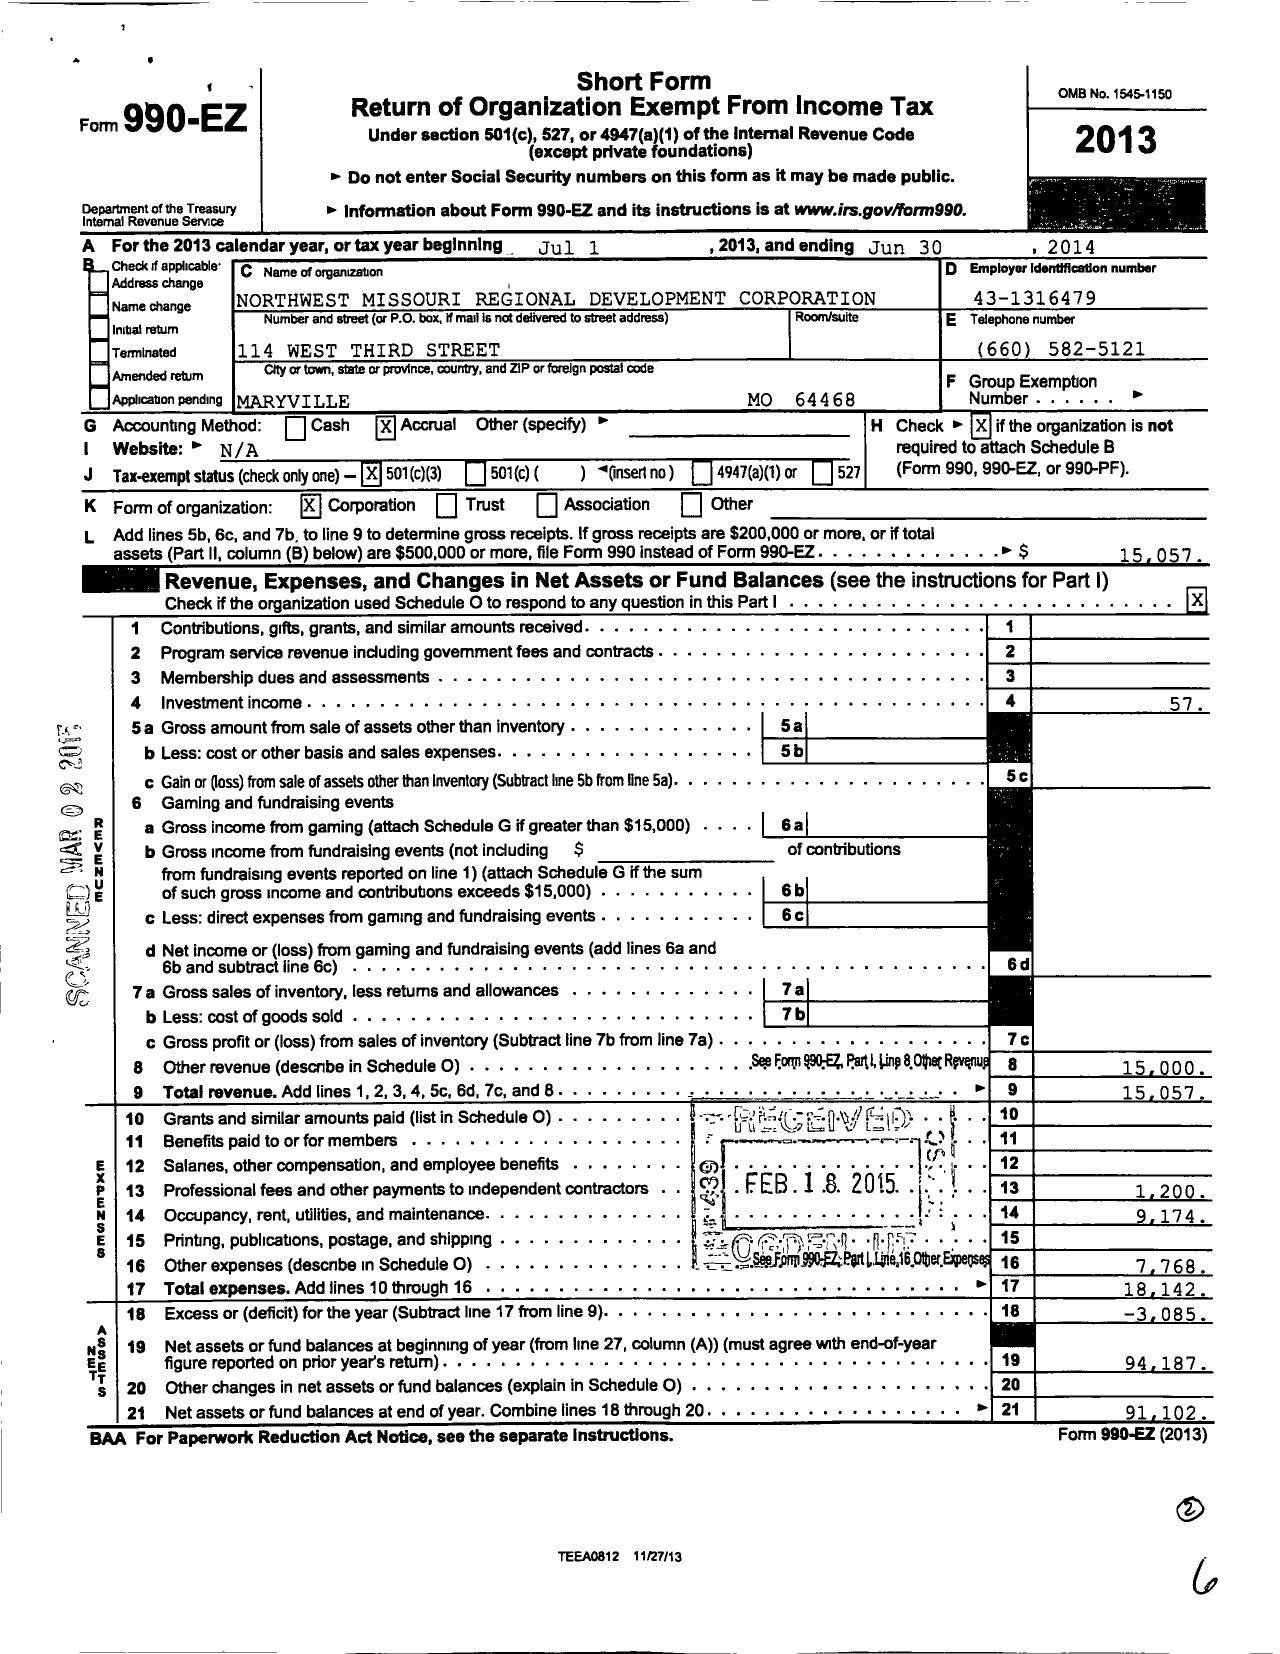 Image of first page of 2013 Form 990EZ for Northwest Missouri Regional Development Corporation